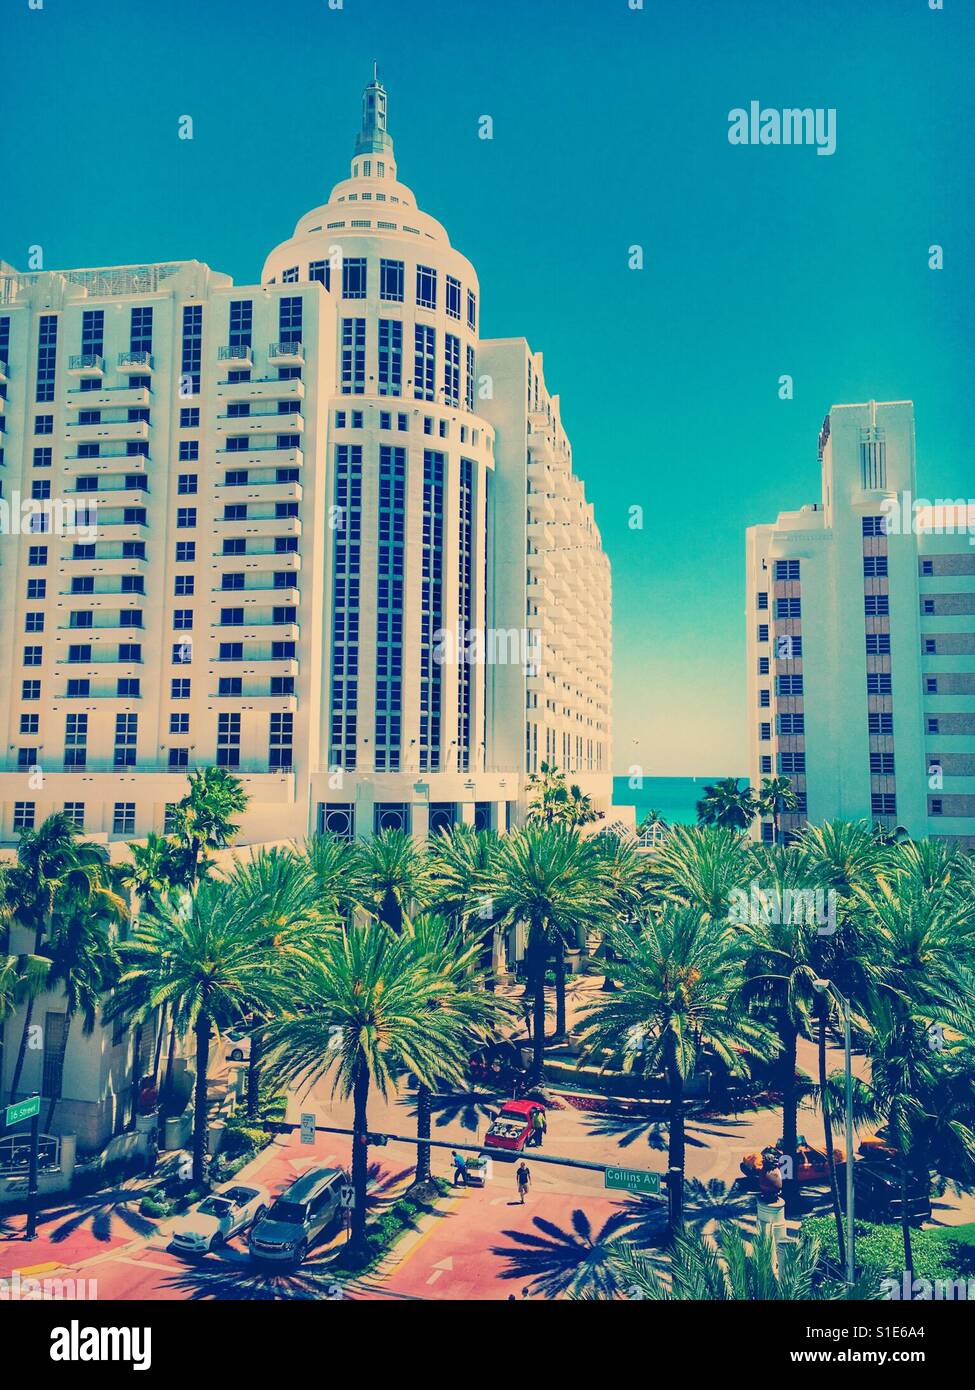 Lowe's Miami Beach hotel Stock Photo